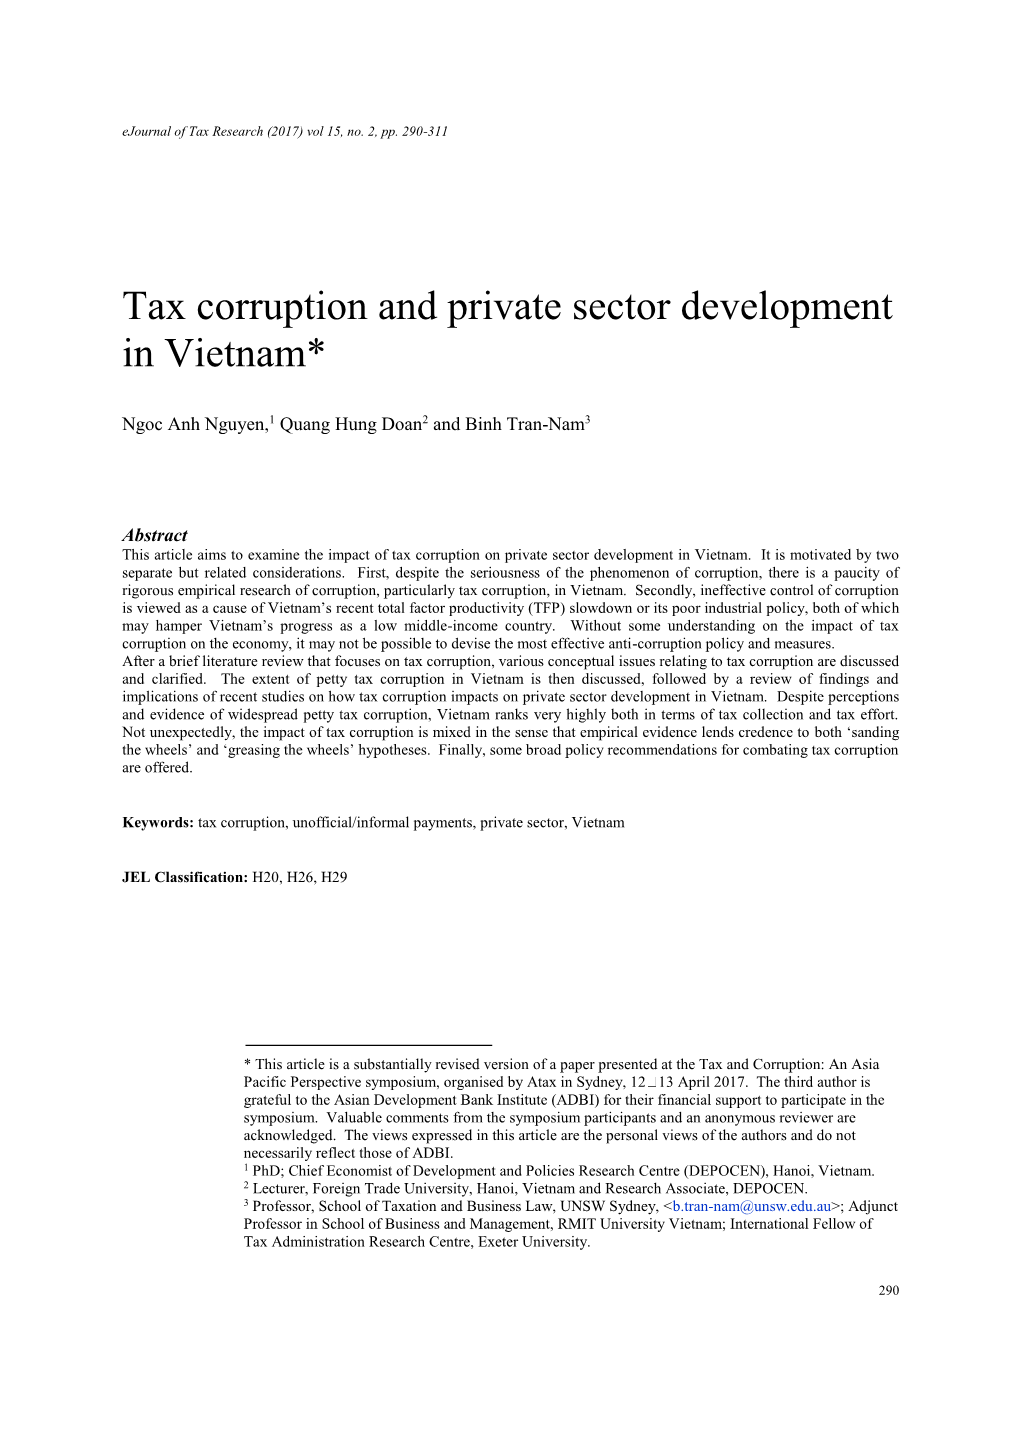 Tax Corruption and Private Sector Development in Vietnam*